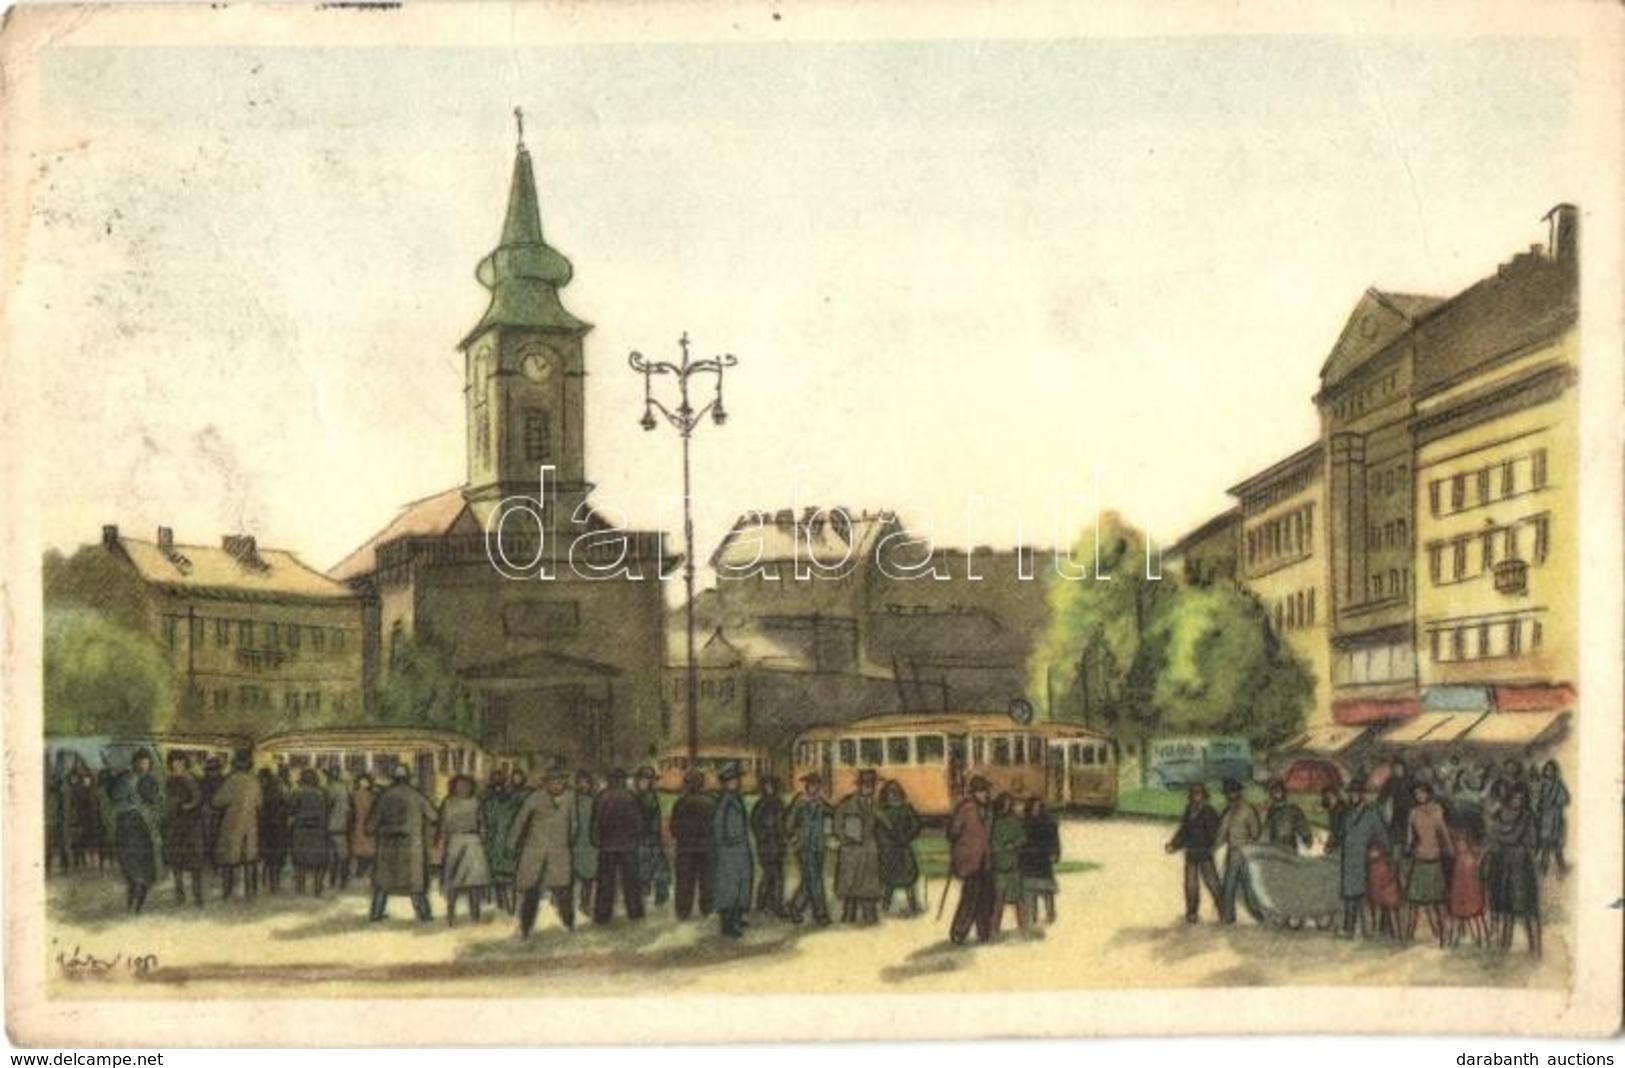 ** * 16 Db VEGYES Magyar Városképes Lap / 16 Mixed Hungarian Town-view Postcards - Unclassified